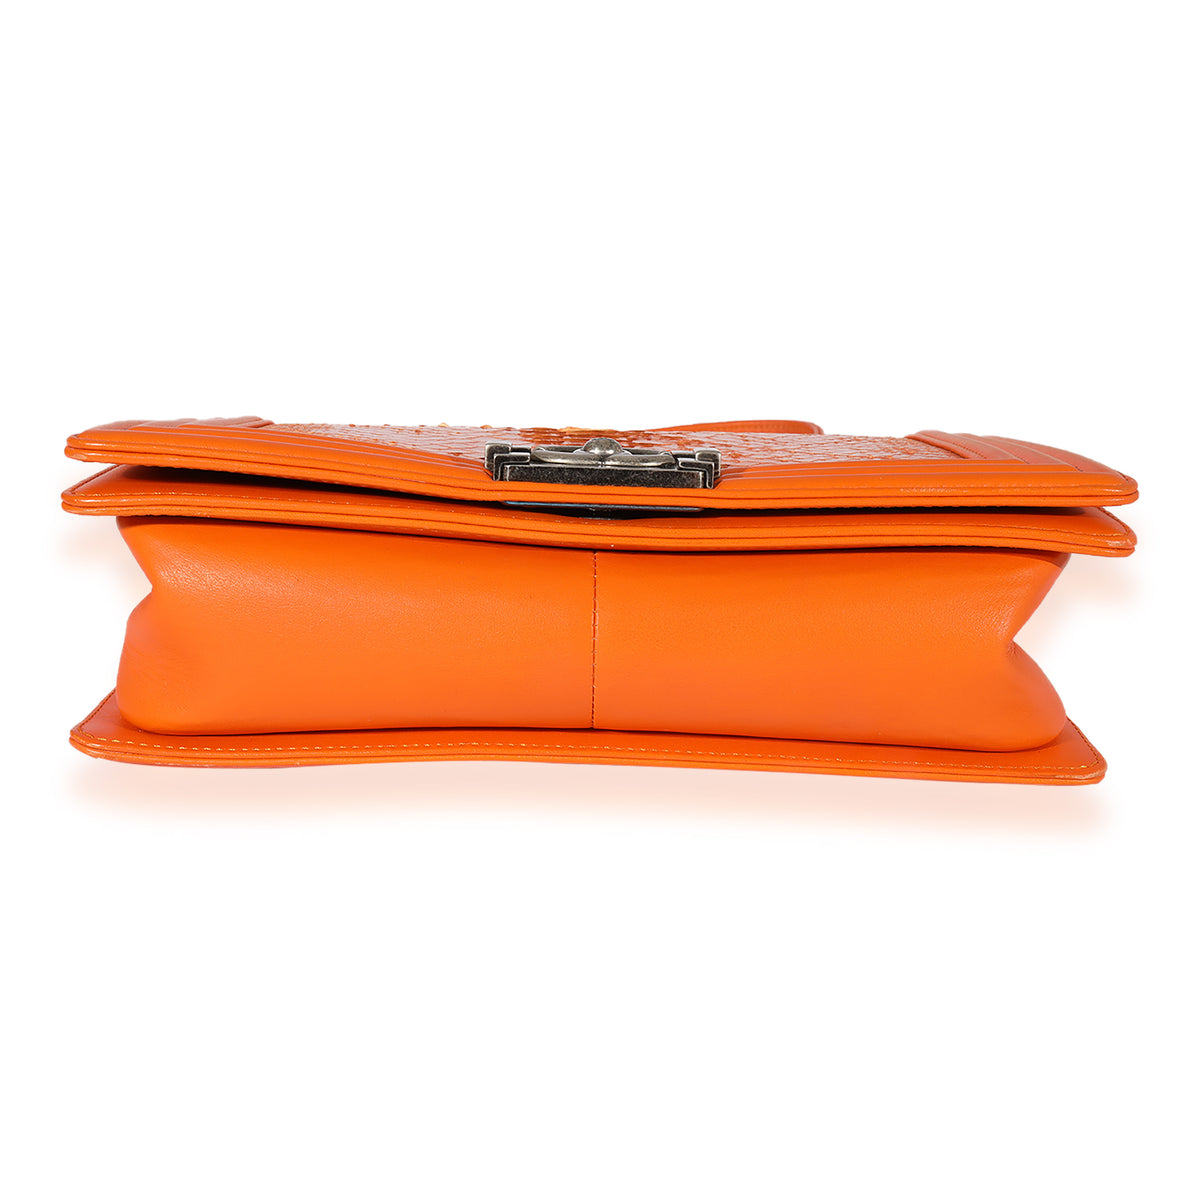 Chanel Orange Python Medium Boy Bag